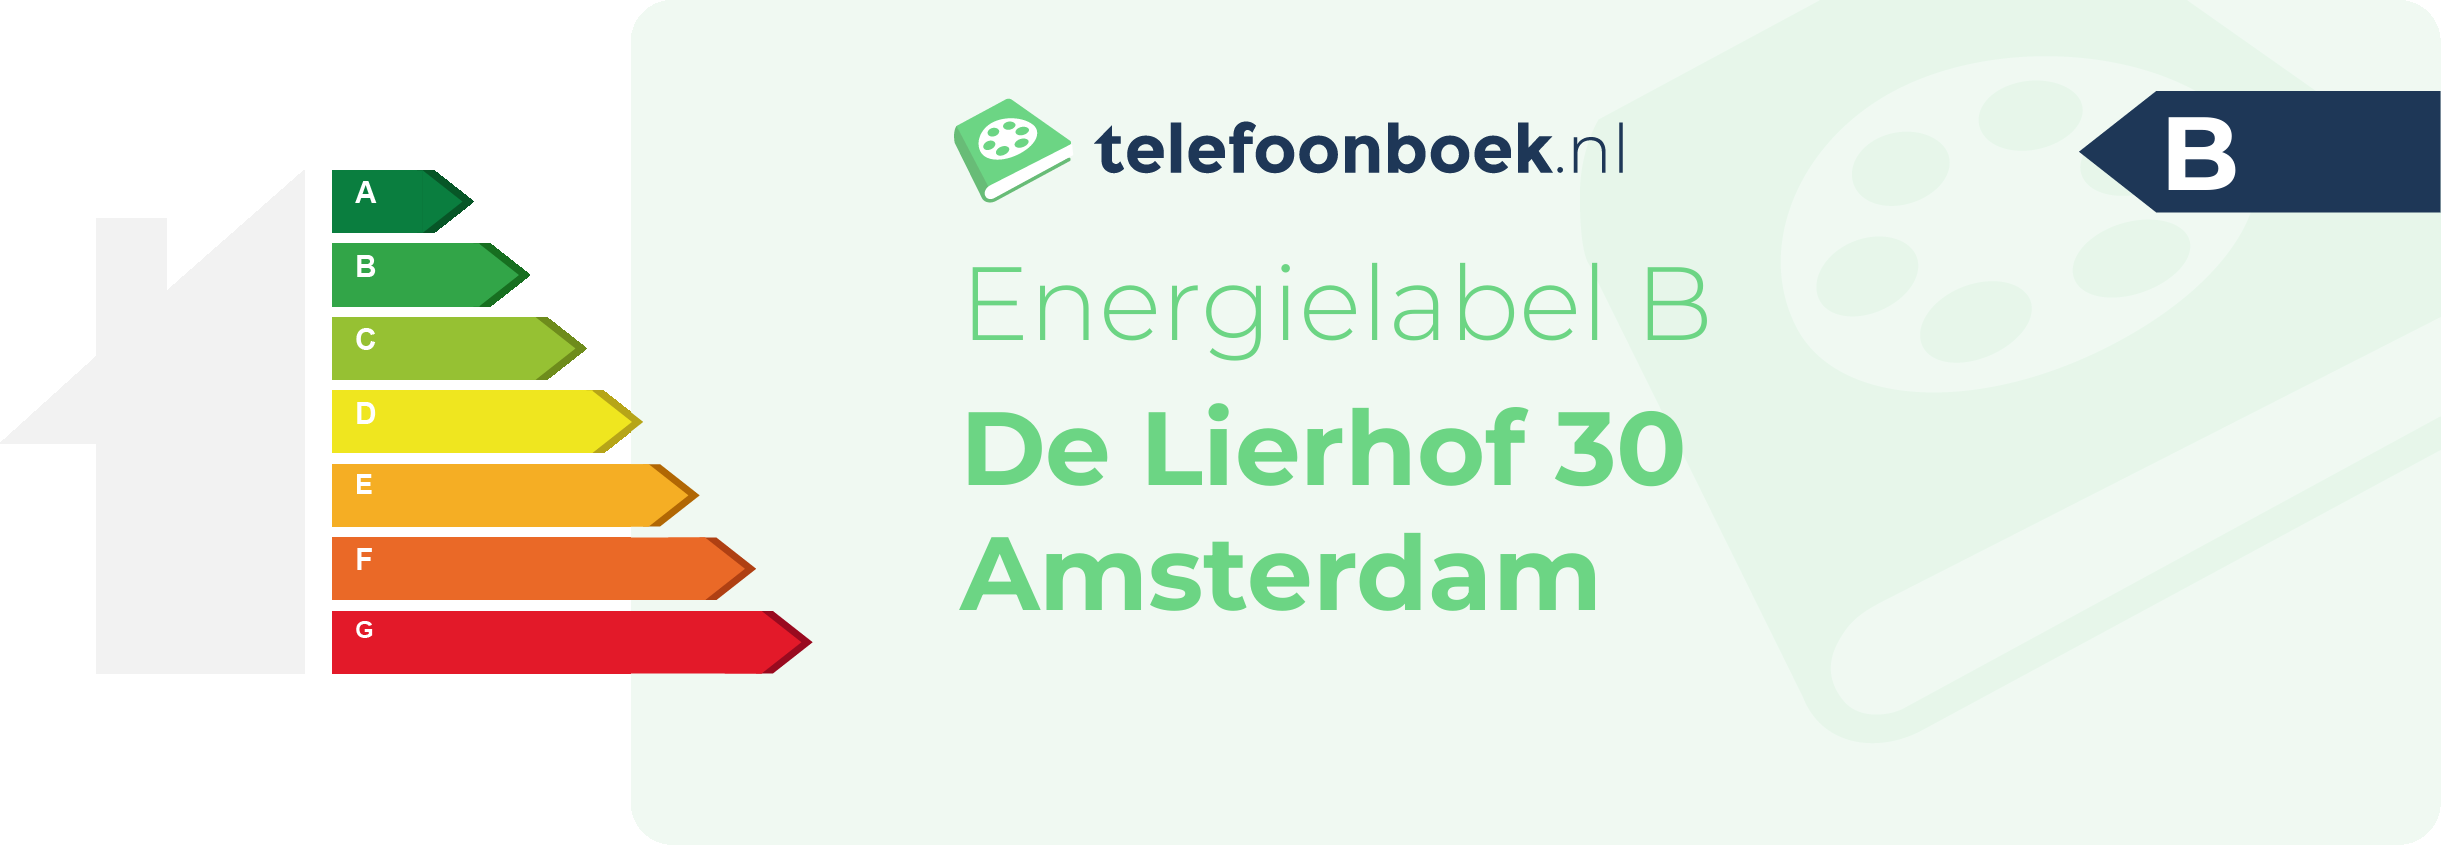 Energielabel De Lierhof 30 Amsterdam